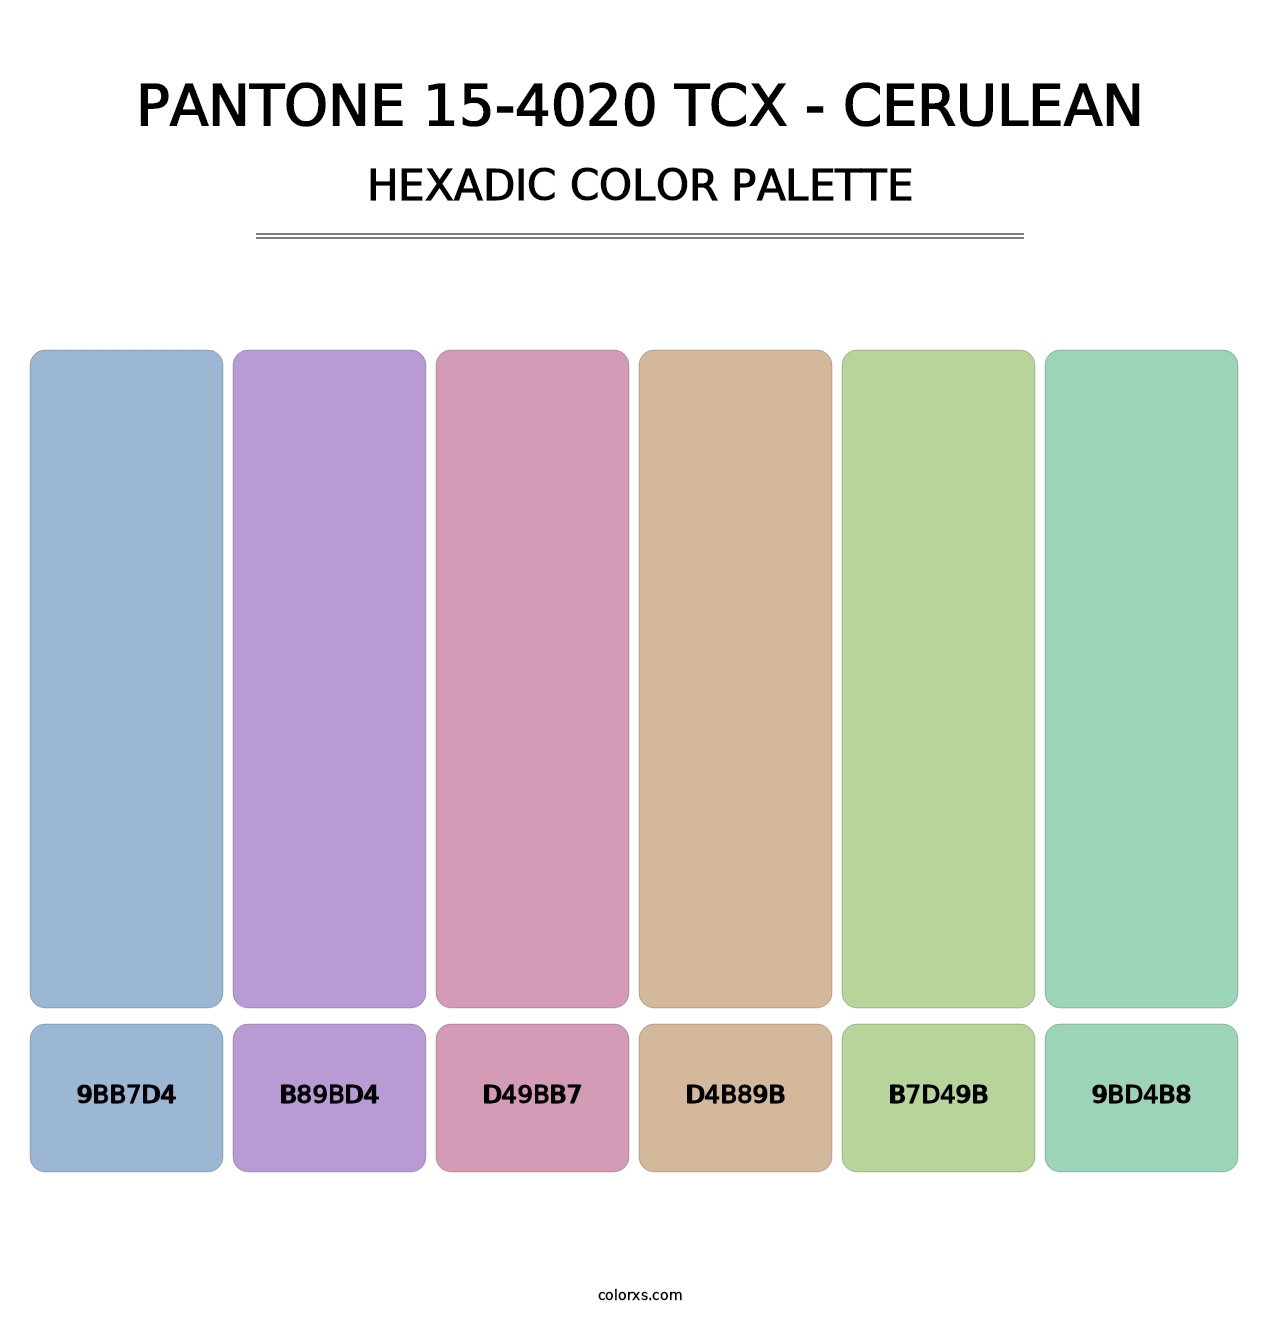 PANTONE 15-4020 TCX - Cerulean - Hexadic Color Palette